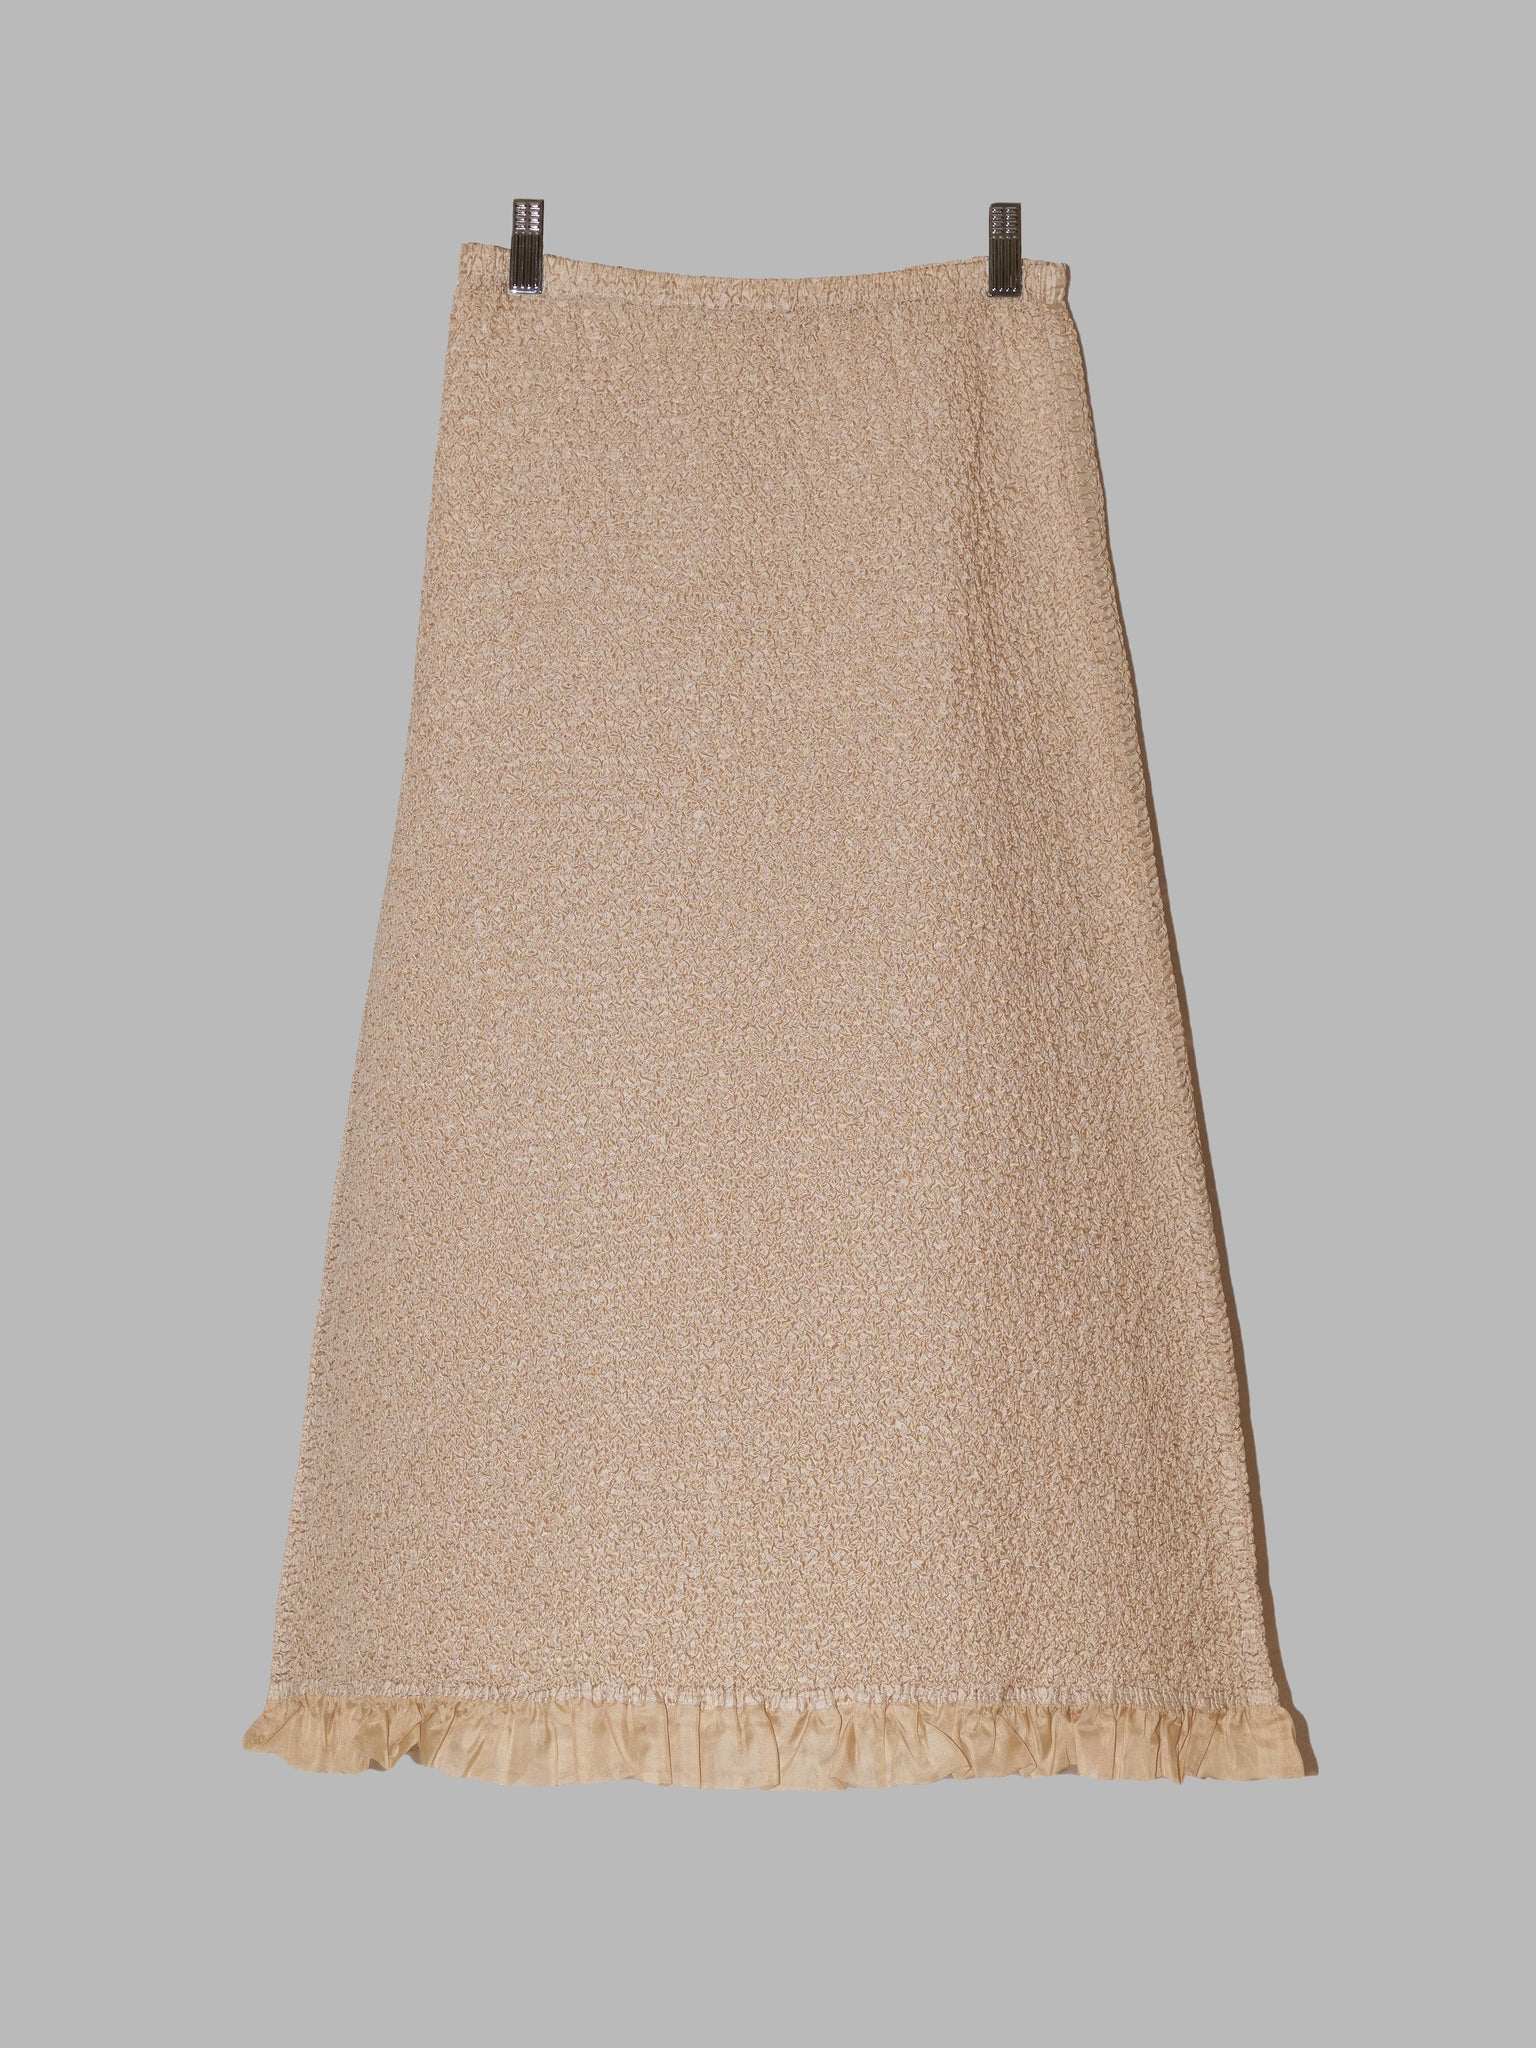 Yoshiki Hishinuma Peplum gold wrinkled polyester top and skirt set - 2 M S